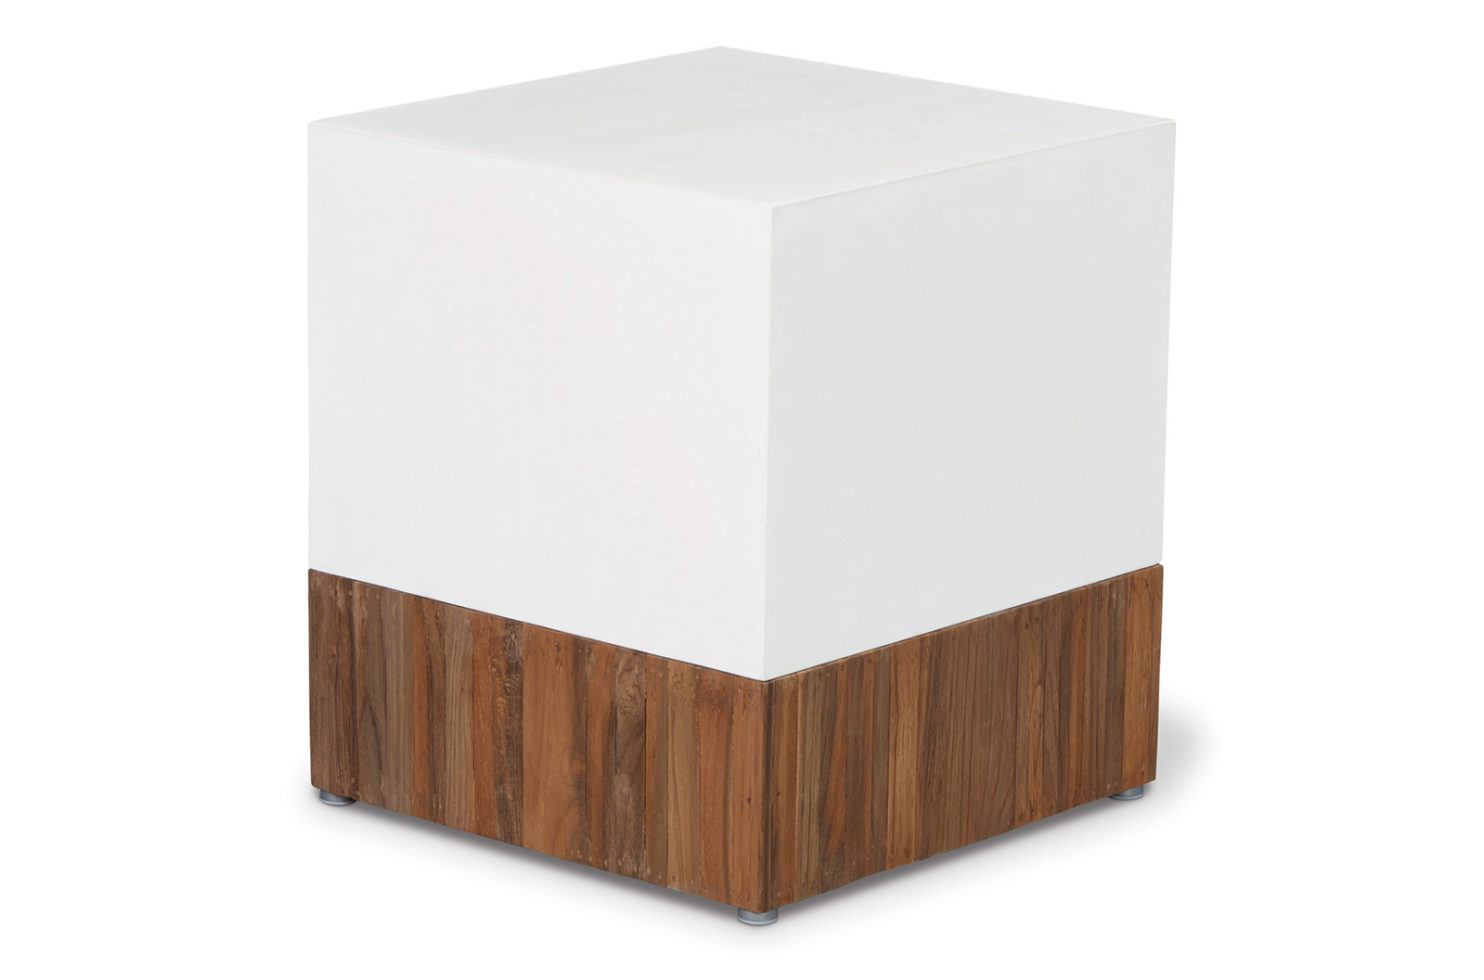 Seasonal Living Perpetual Concrete and Teak Magic Cube